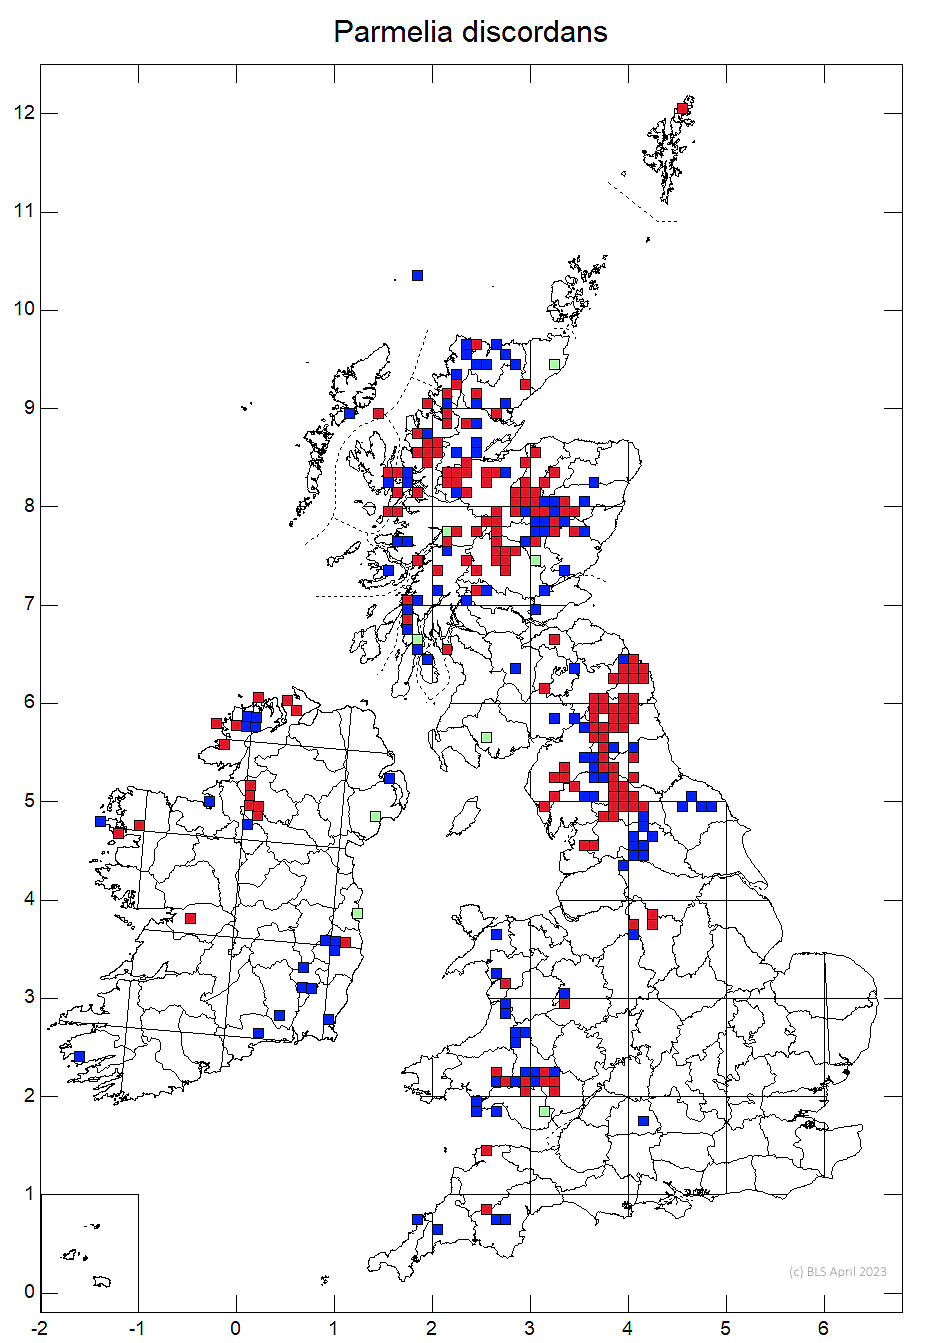 Parmelia discordans 10km sq distribution map